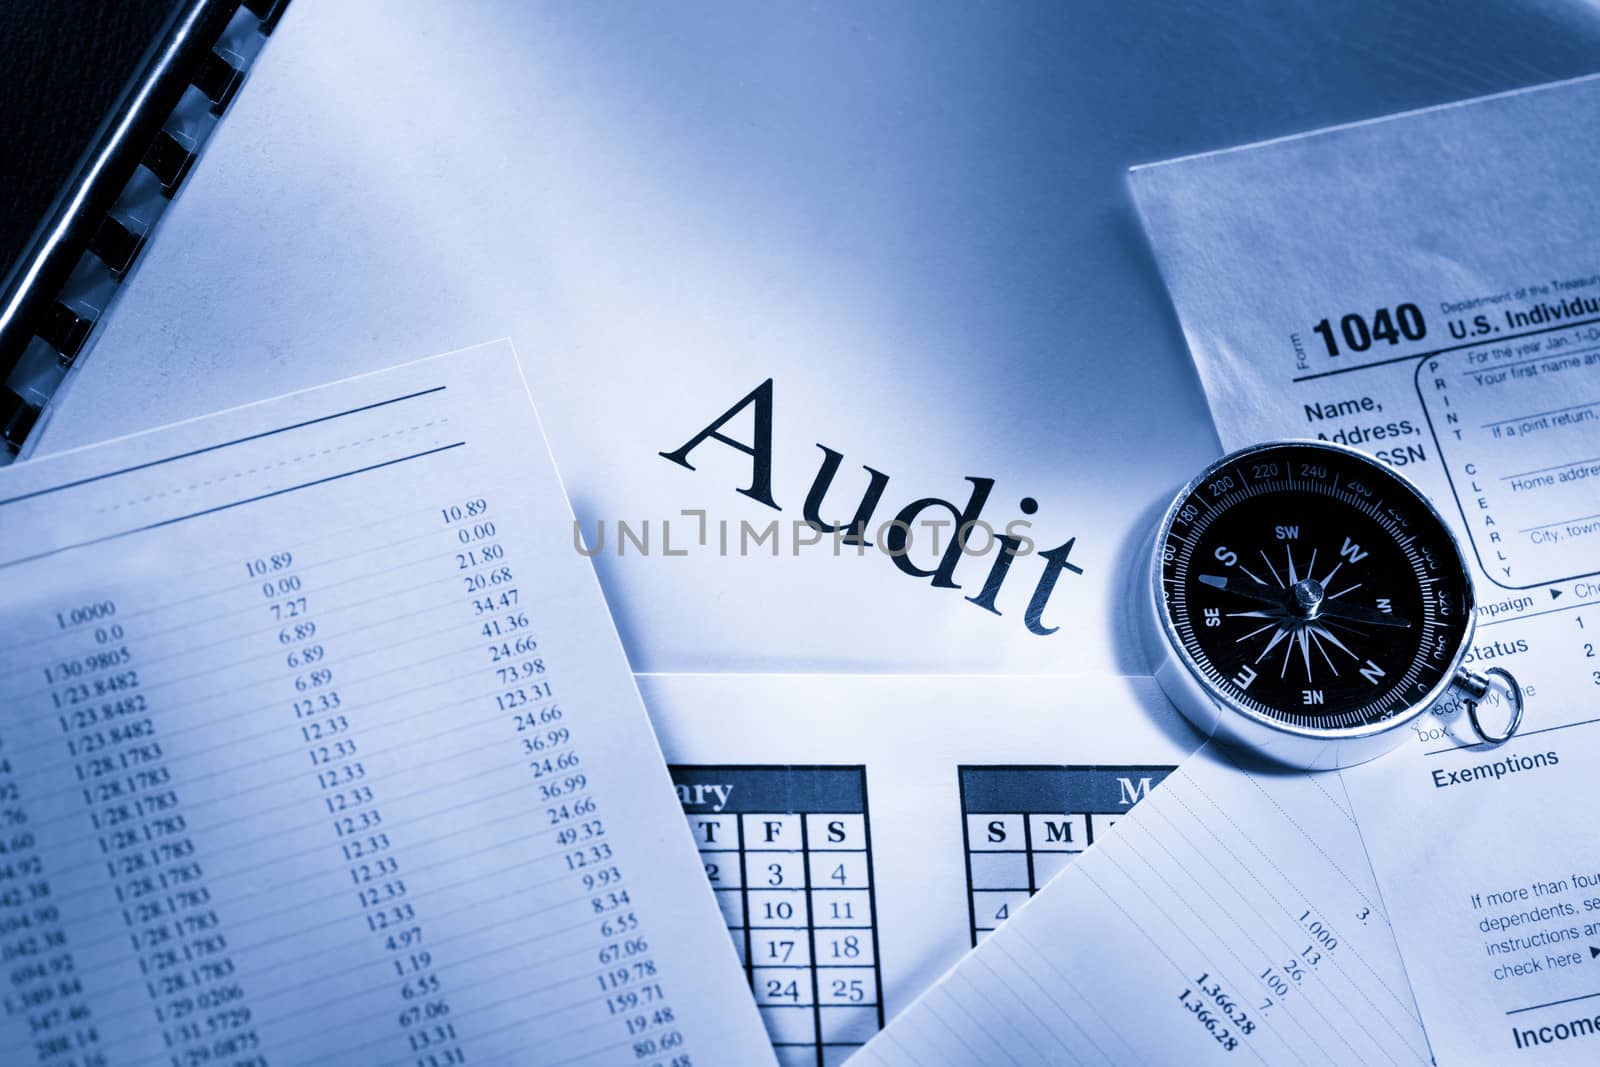 Operating budget, calendar, compass and audit